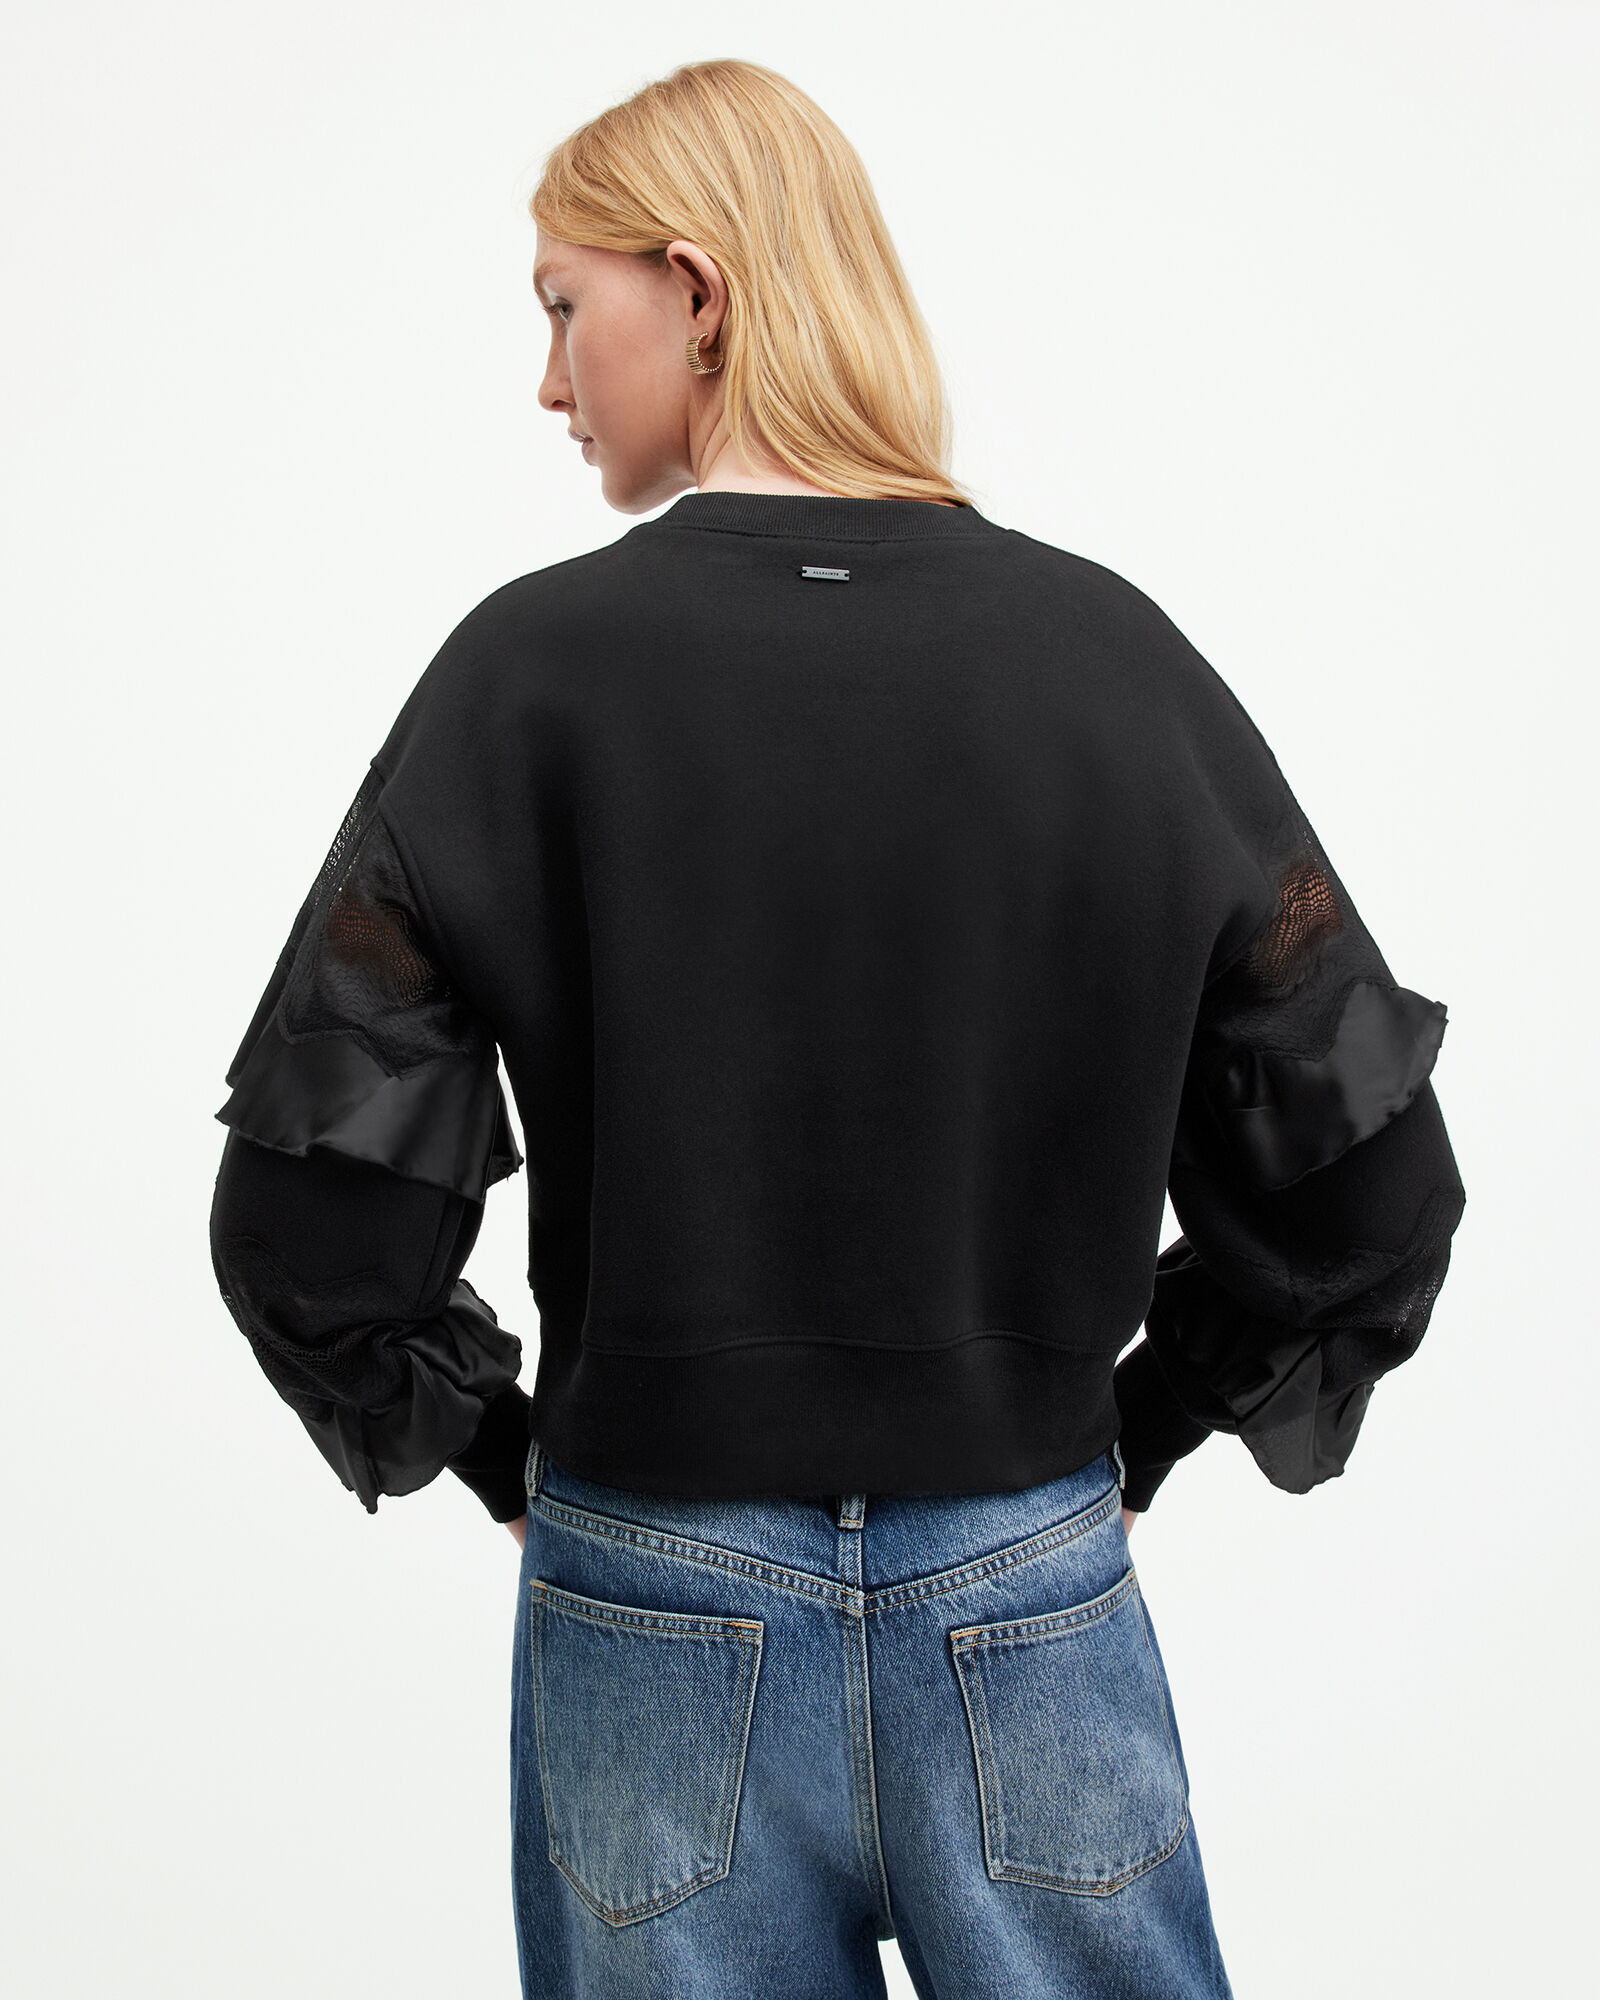 Gracie Lace Panelled Frill Sweatshirt